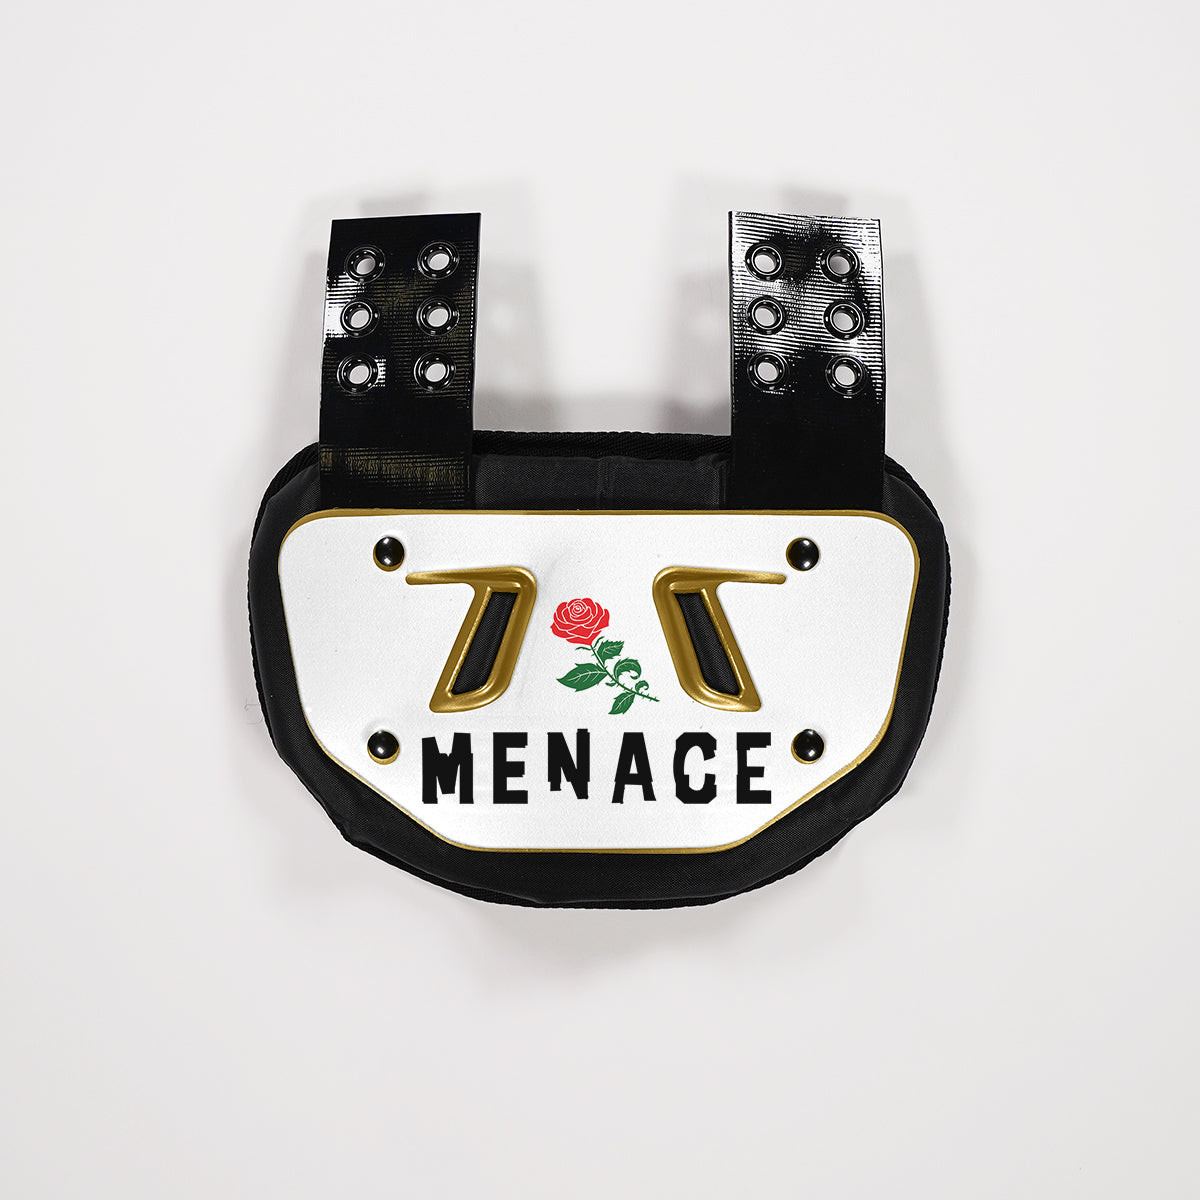 Menace Sticker for Back Plate